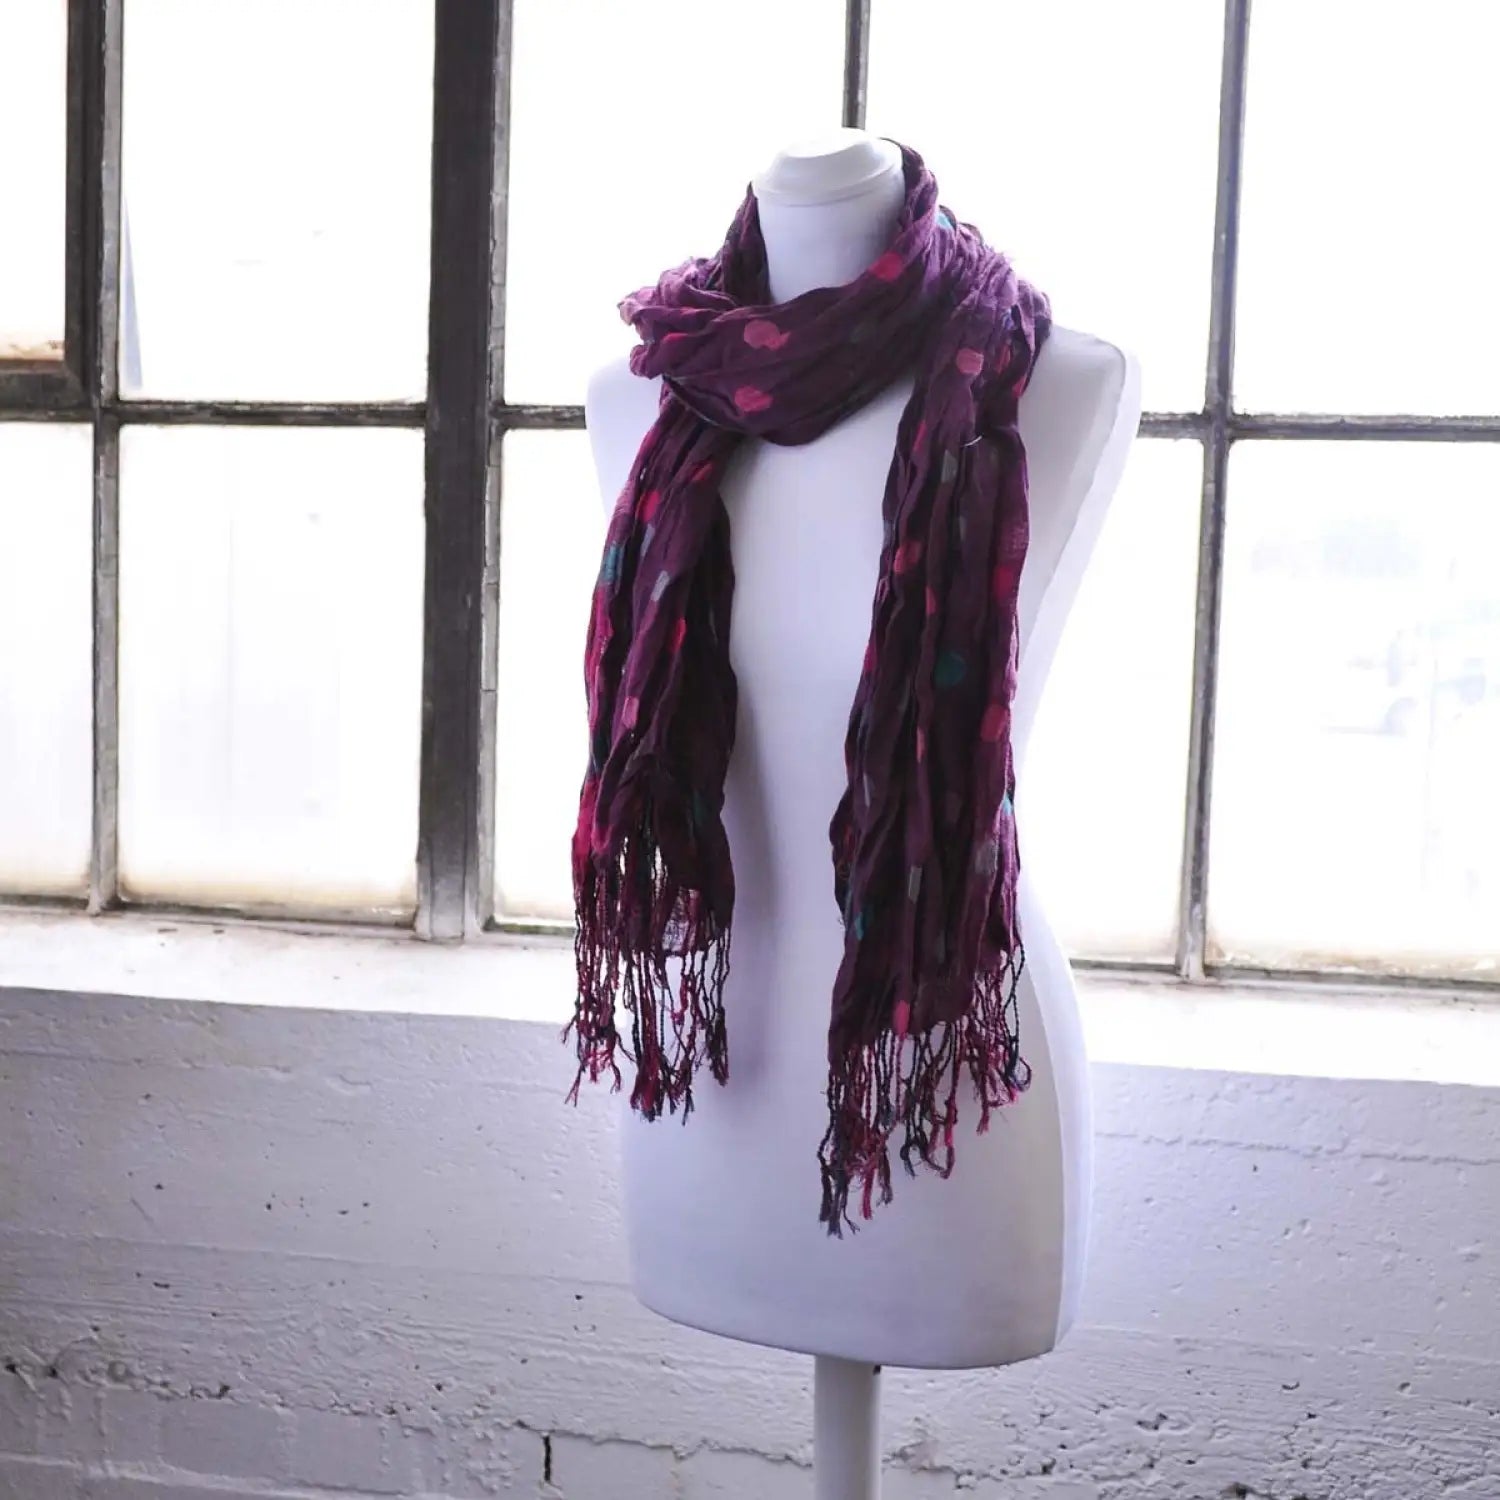 Polka dot print tasselled scarf displayed on mannequin by window